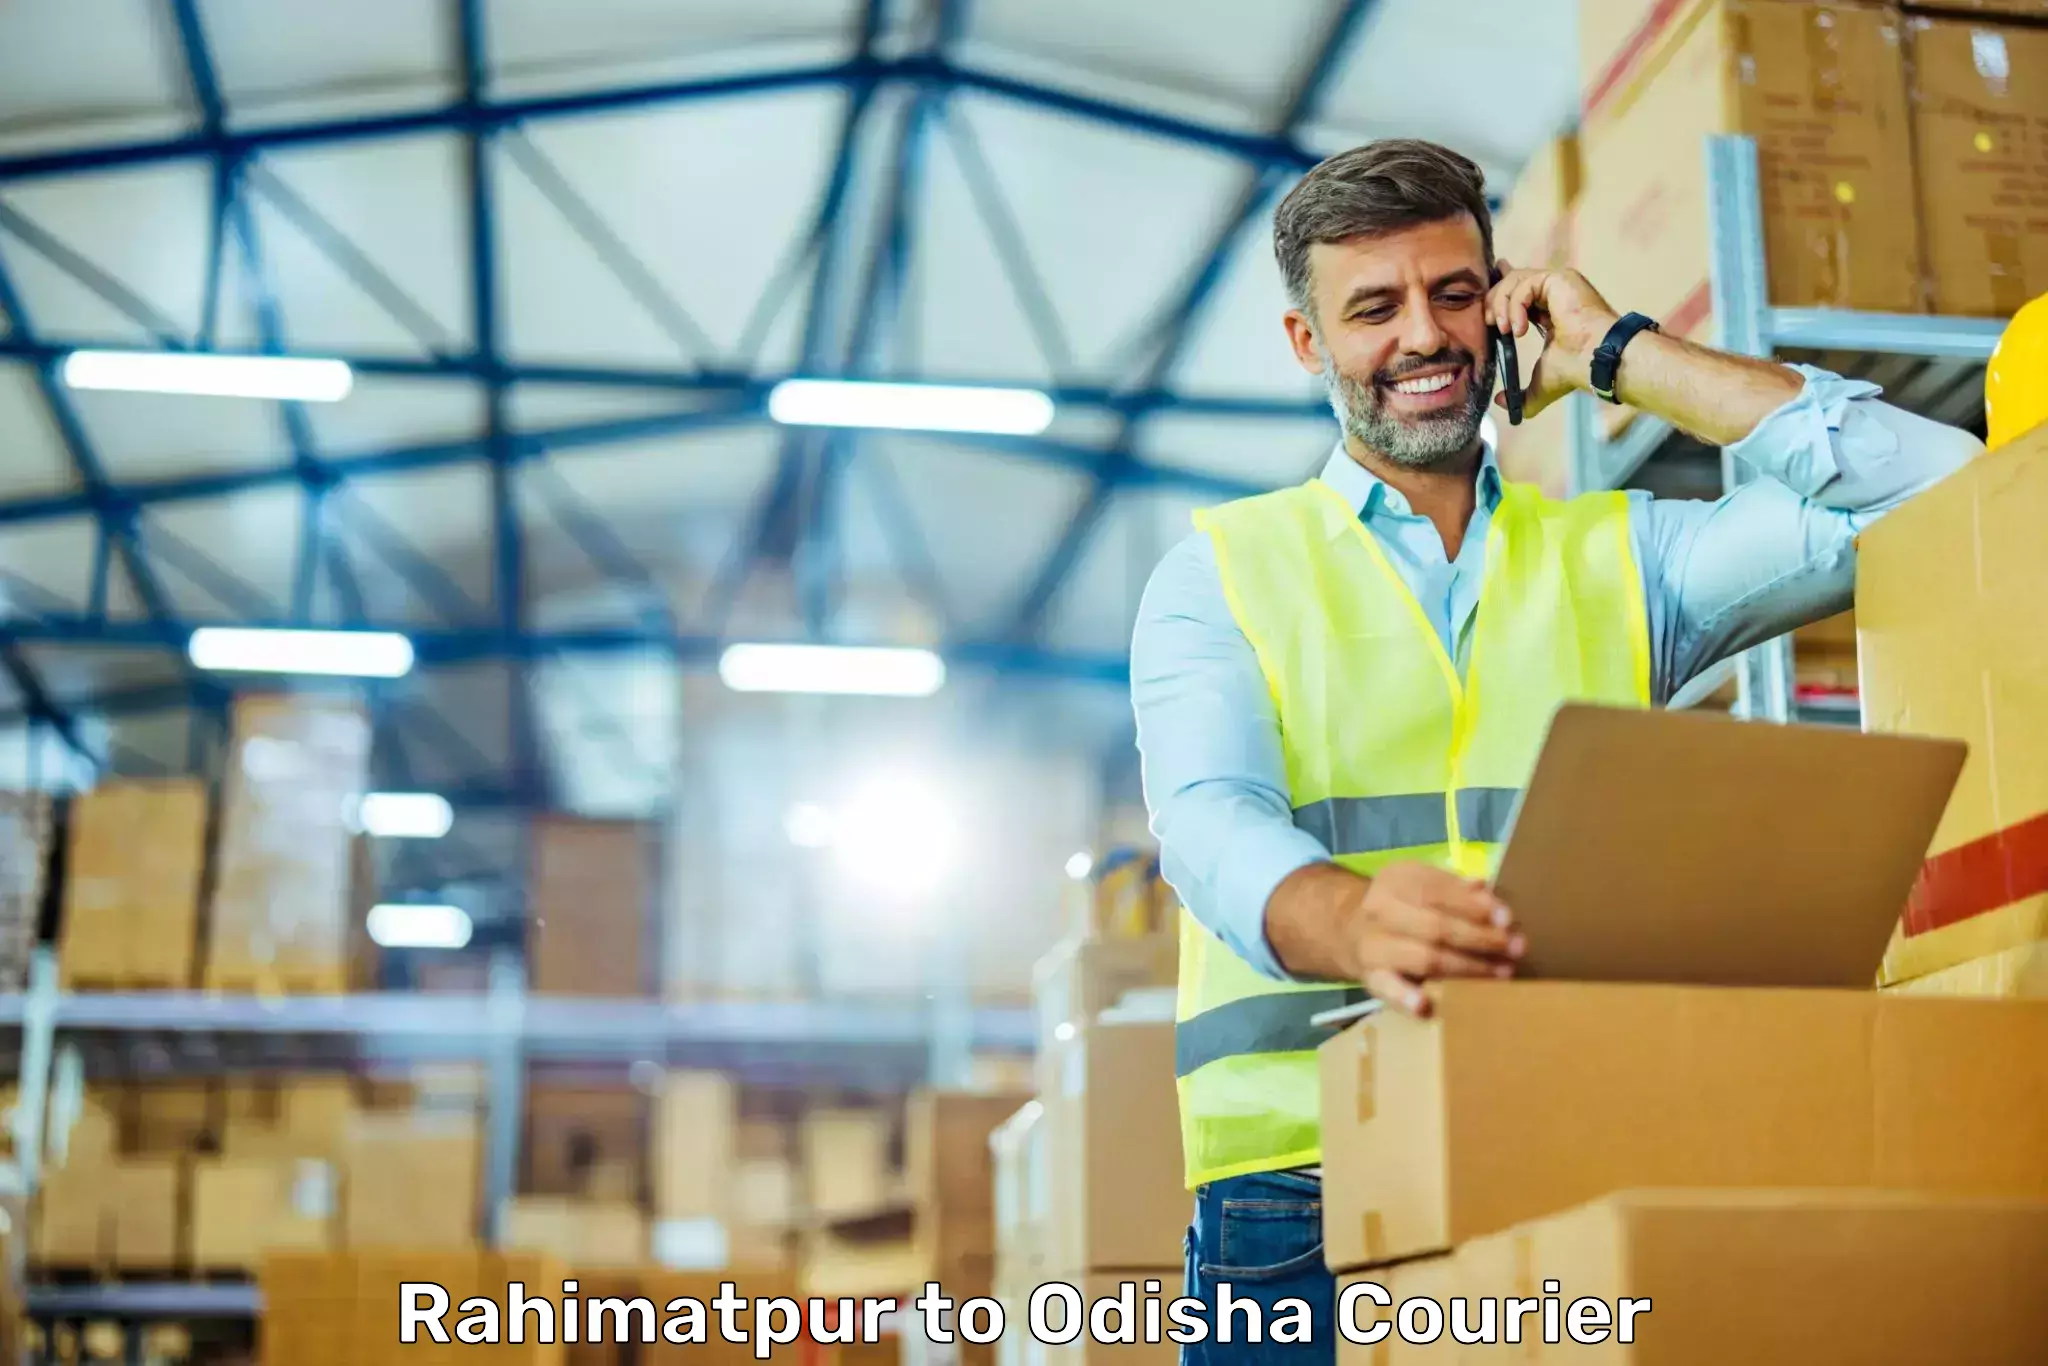 Courier service comparison Rahimatpur to Kamakhyanagar